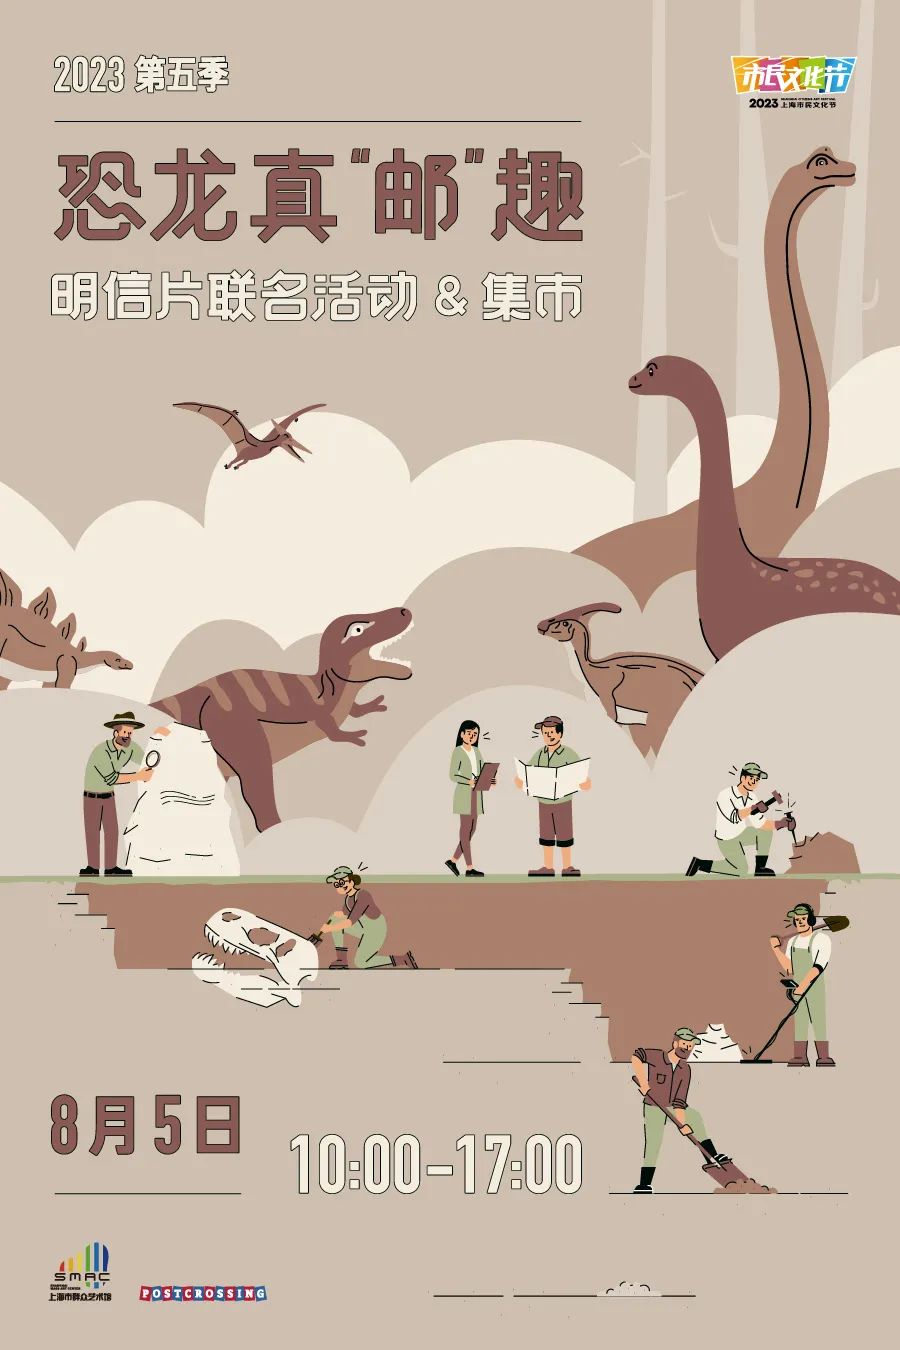 Dinosaurs on postcrossing postcard of China 2023